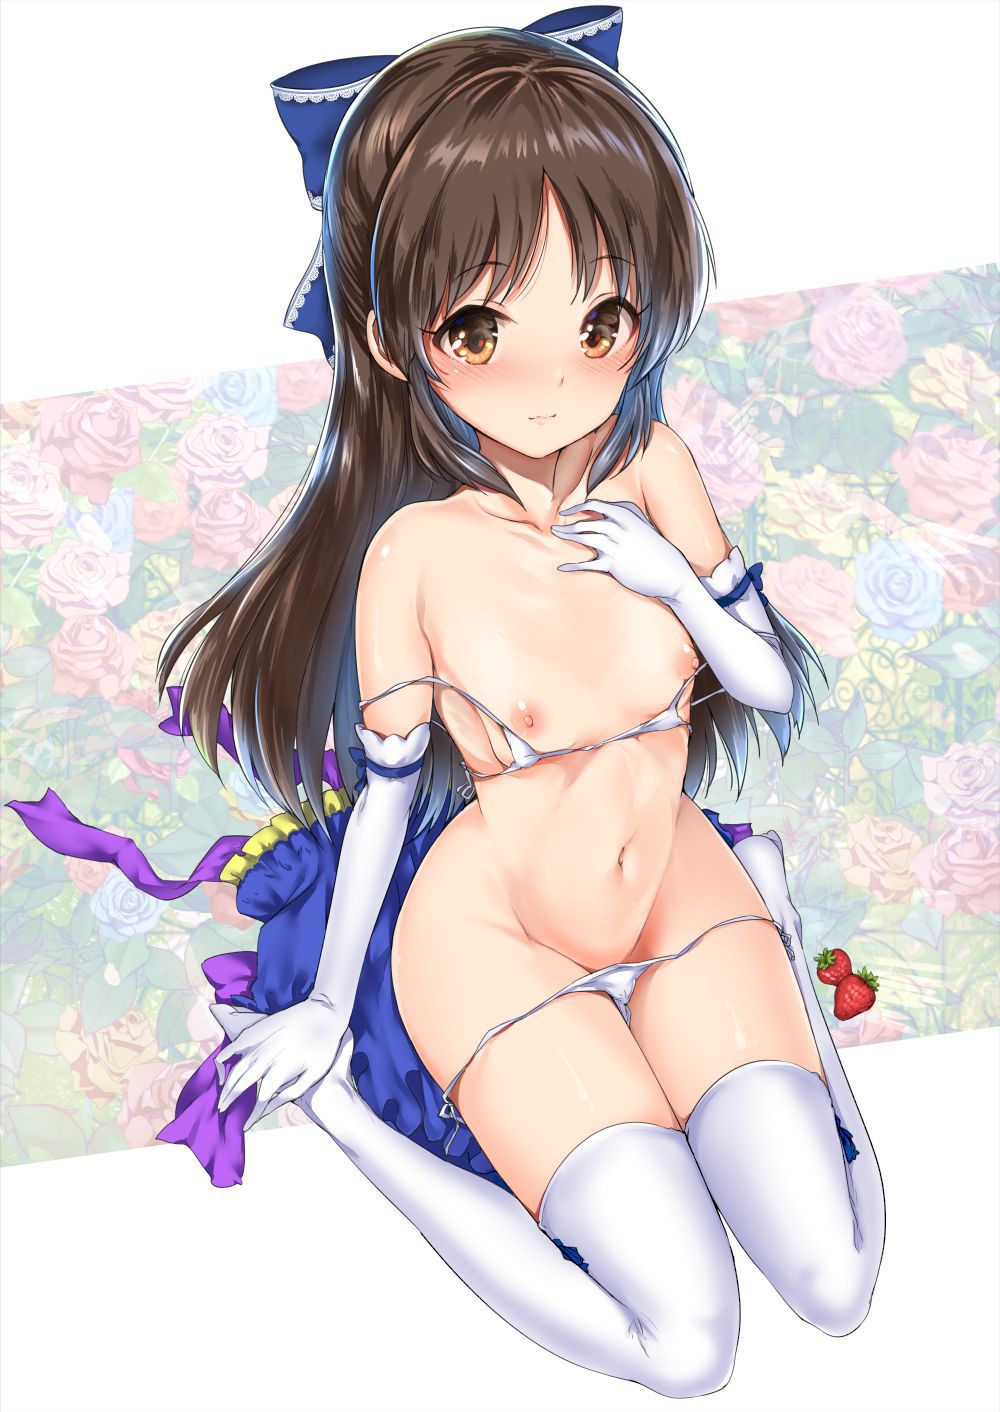 【Erotic Anime Summary】 Erotic image of a creepy girl wearing white pure white underwear 【Secondary erotic】 30